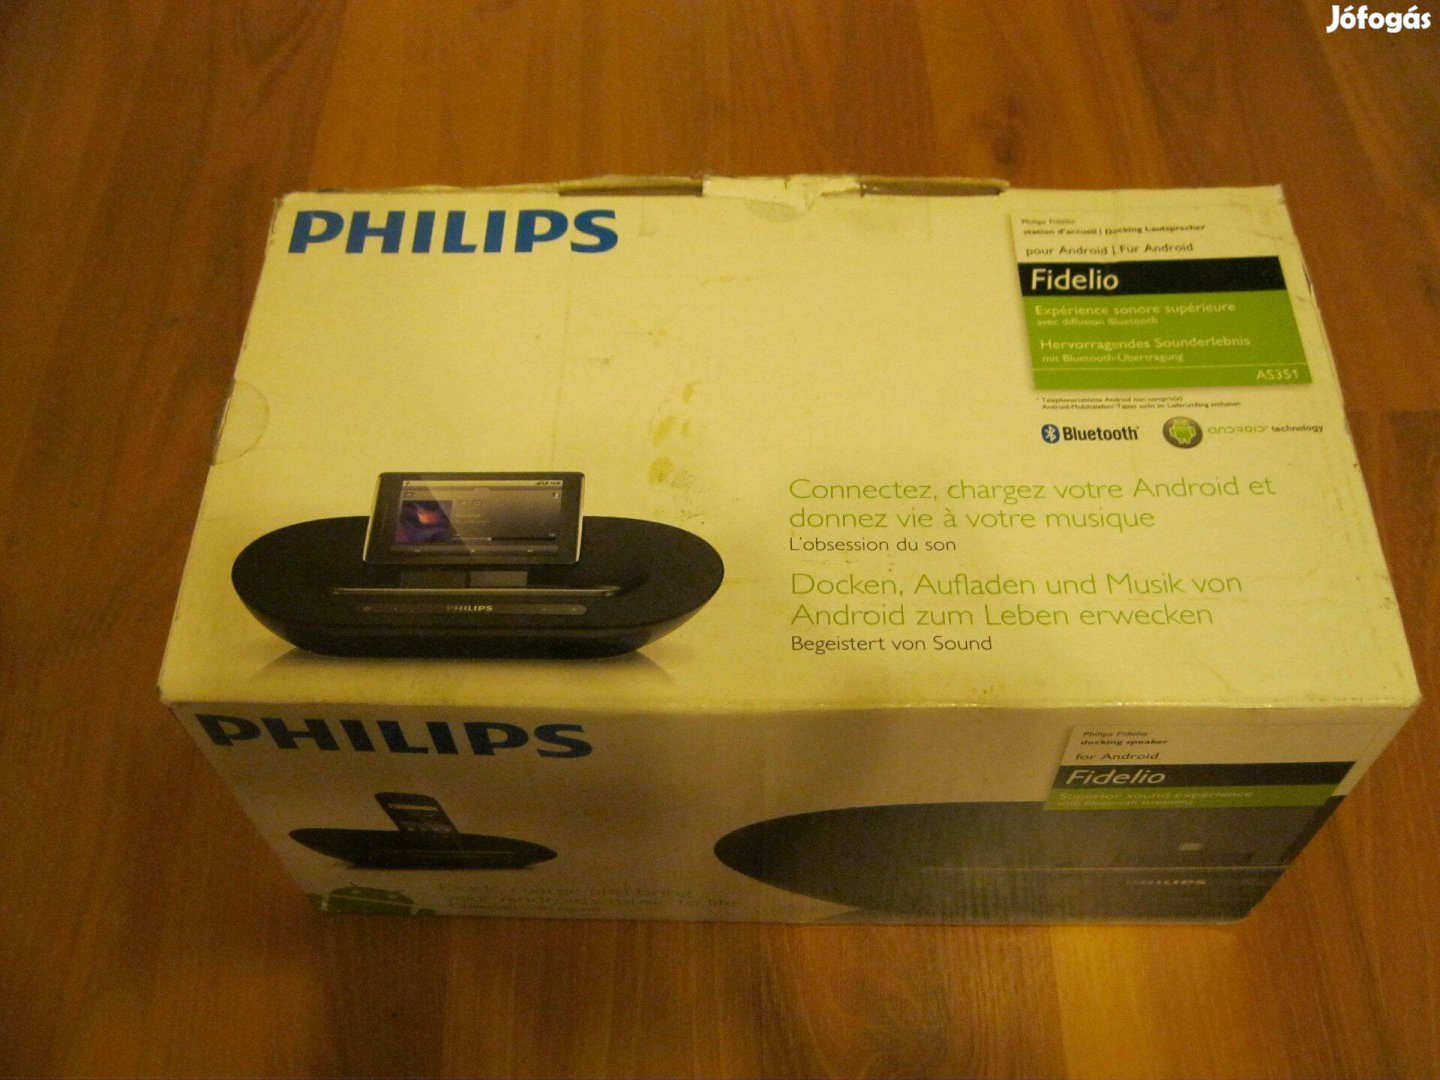 Philips Fidelio AS351 dokkolós hangsugárzó